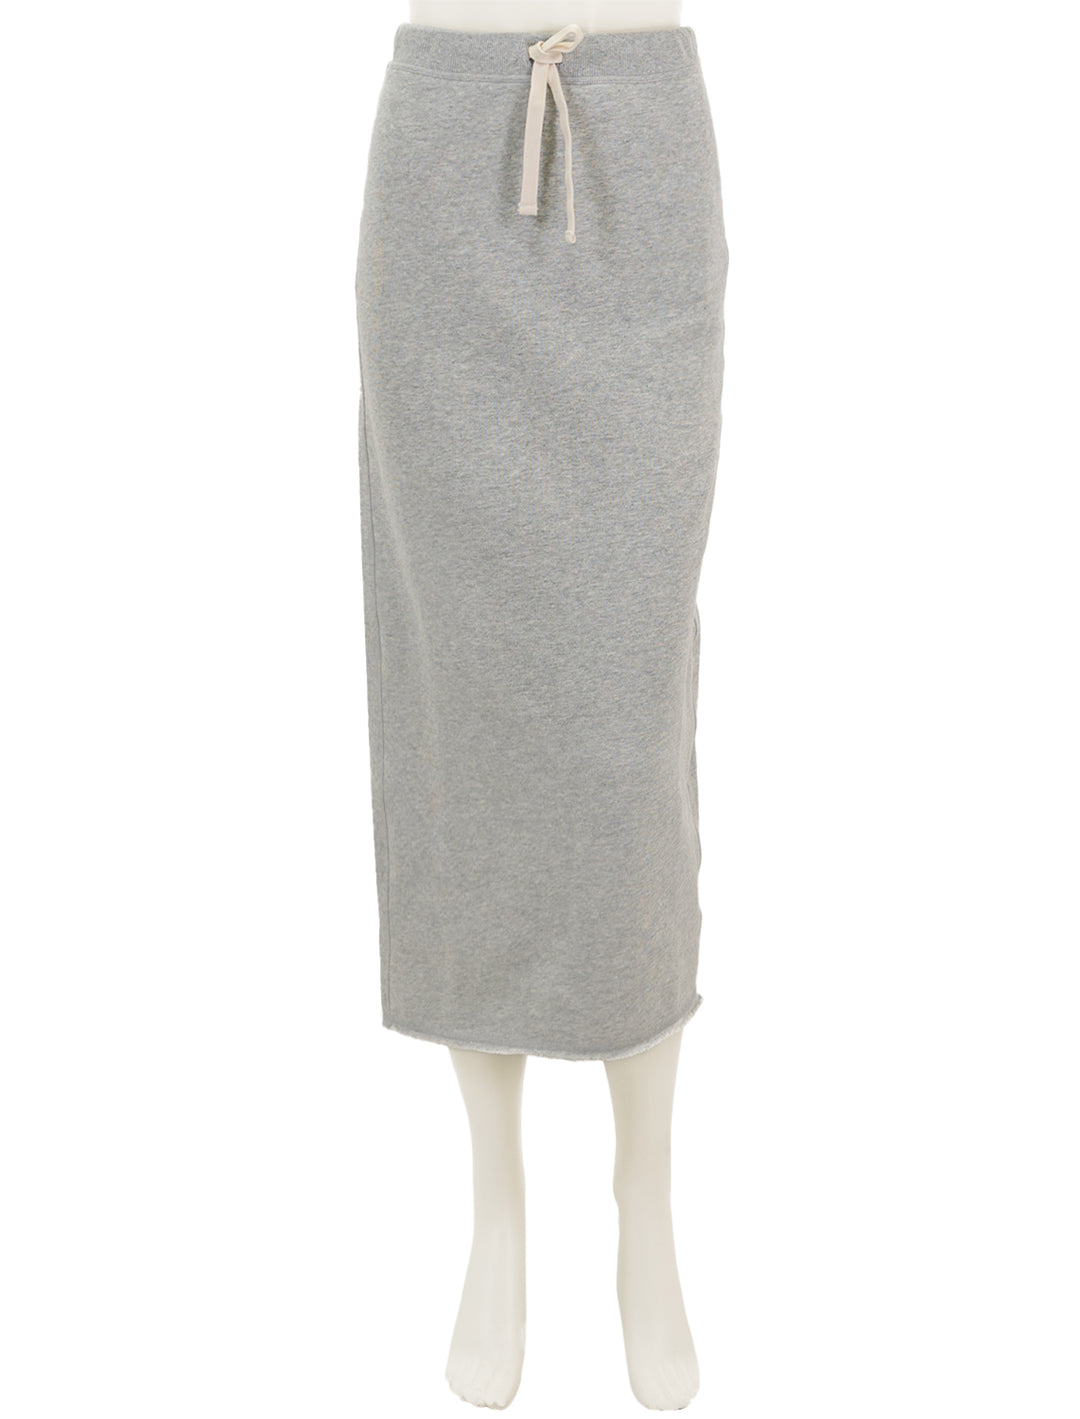 Front view of Rag & Bone's vintage terry midi skirt in heather grey.